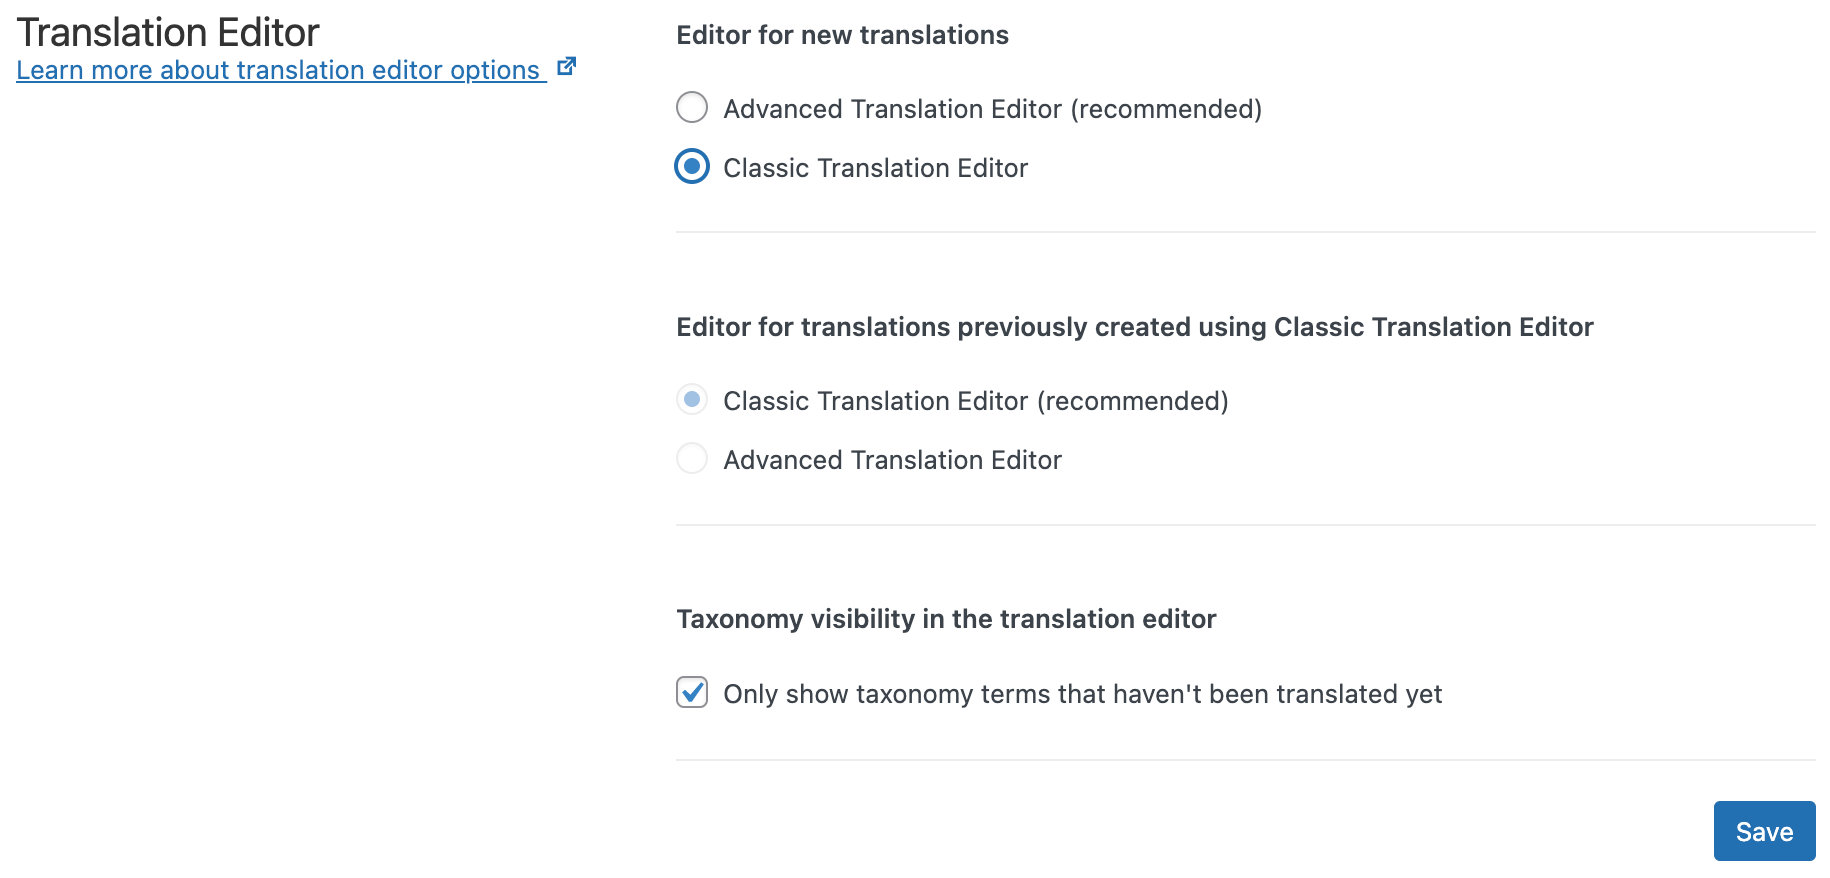 Translation Editor setting in WPML